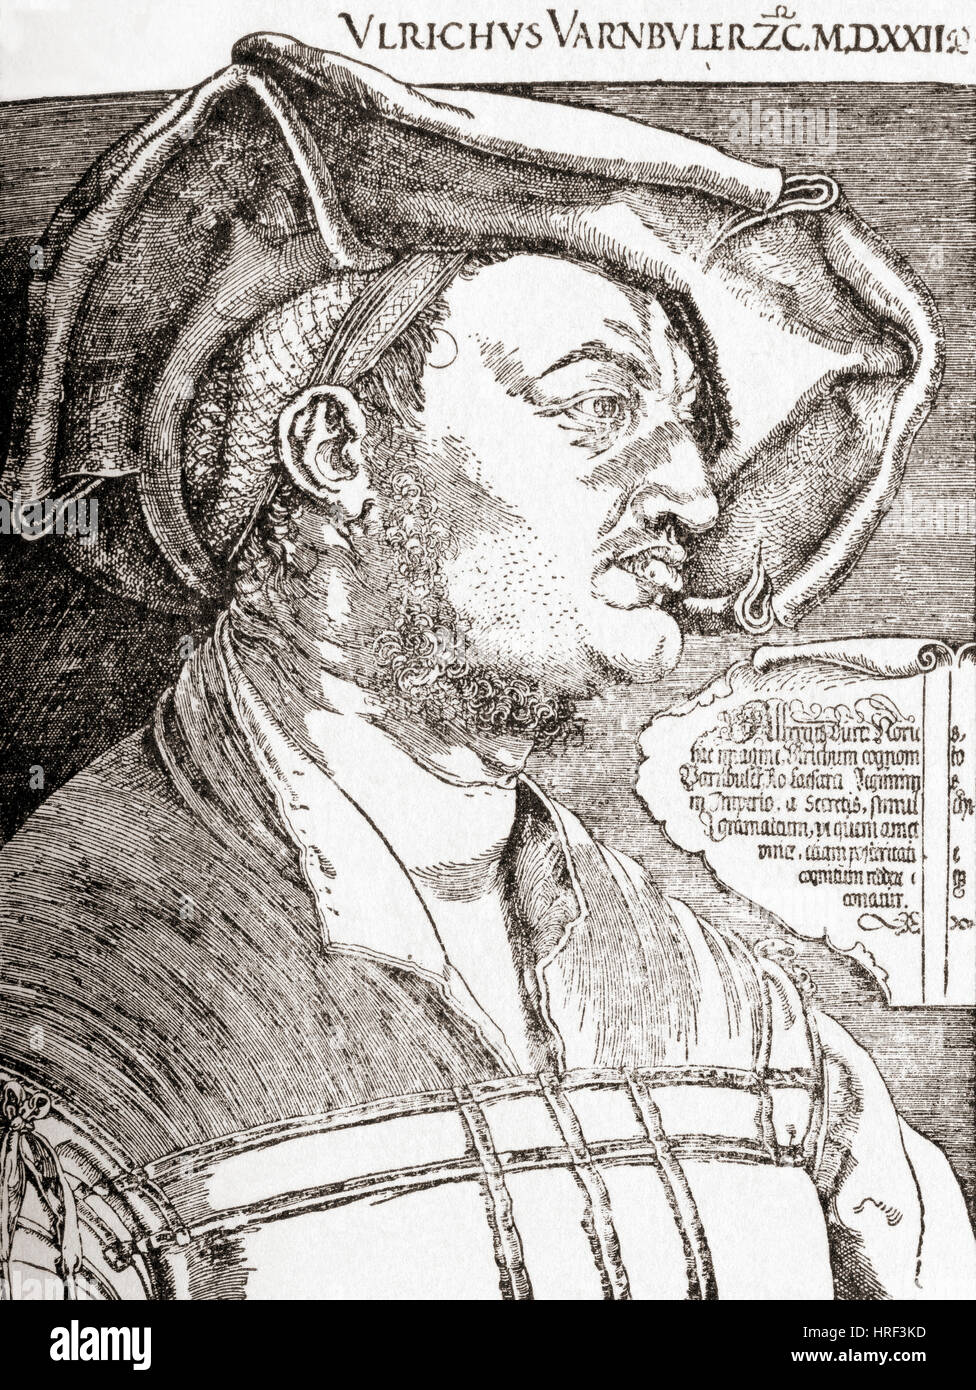 Portrait of Ulrich Varnbüler in 1522, mayor of St. Gallen, Switzerland. After Albrecht Dürer, 1471-1528.  From Meyers Lexicon, published 1927. Stock Photo